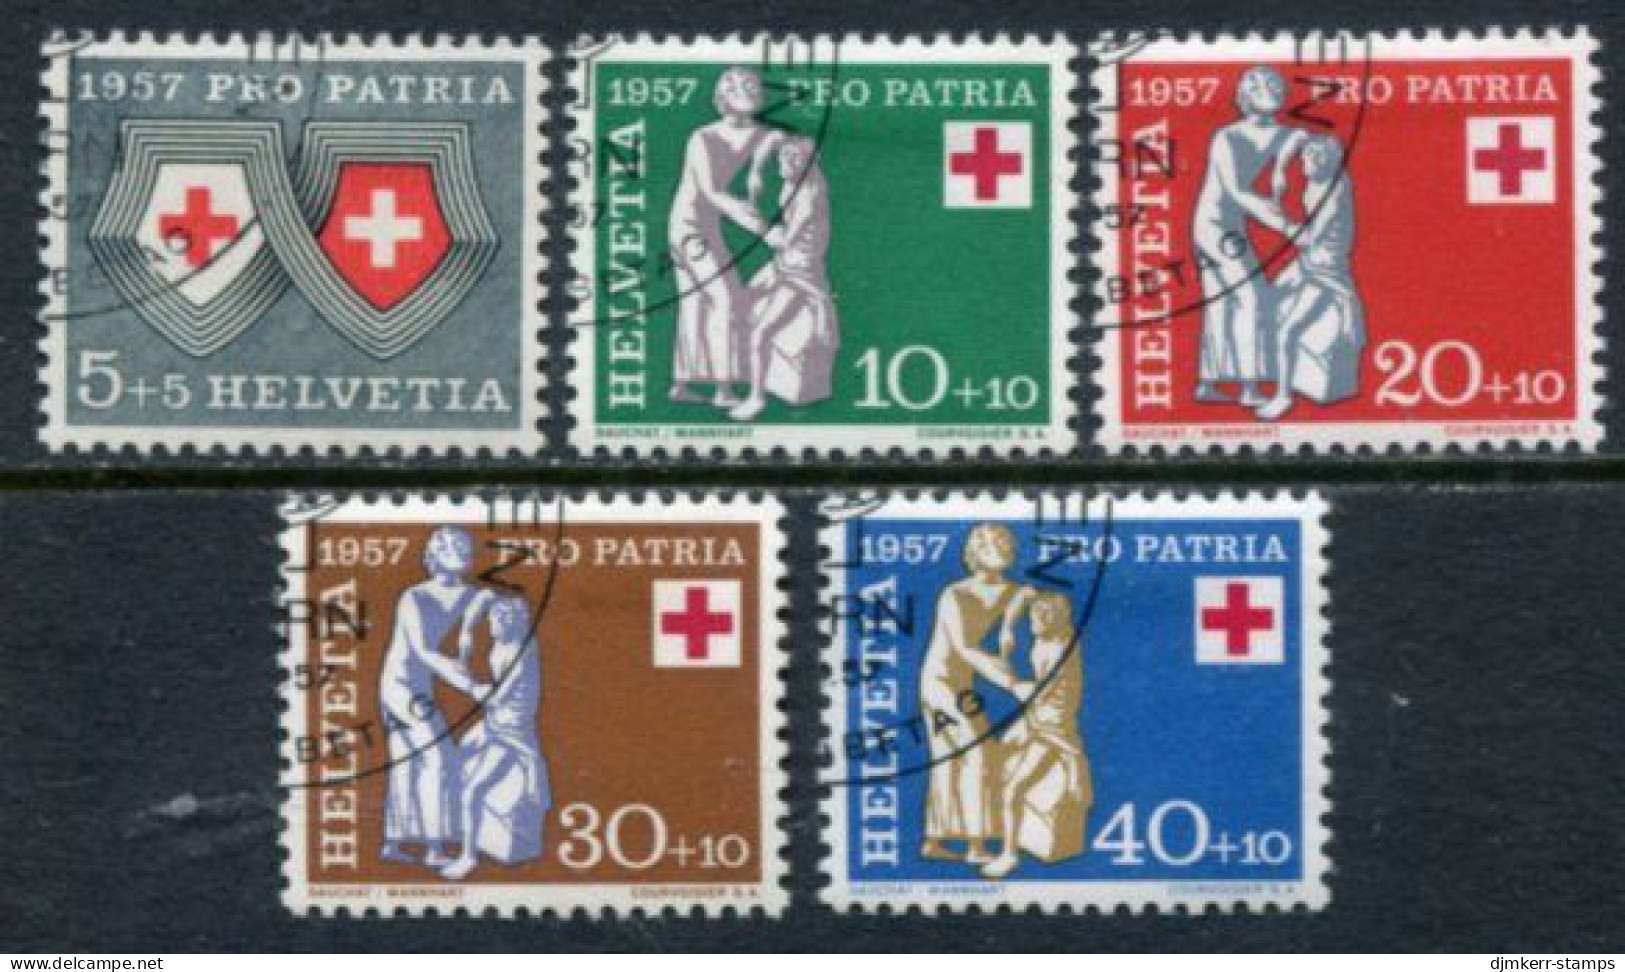 SWITZERLAND 1957 Pro Patria Used. Michel 641-45 - Used Stamps